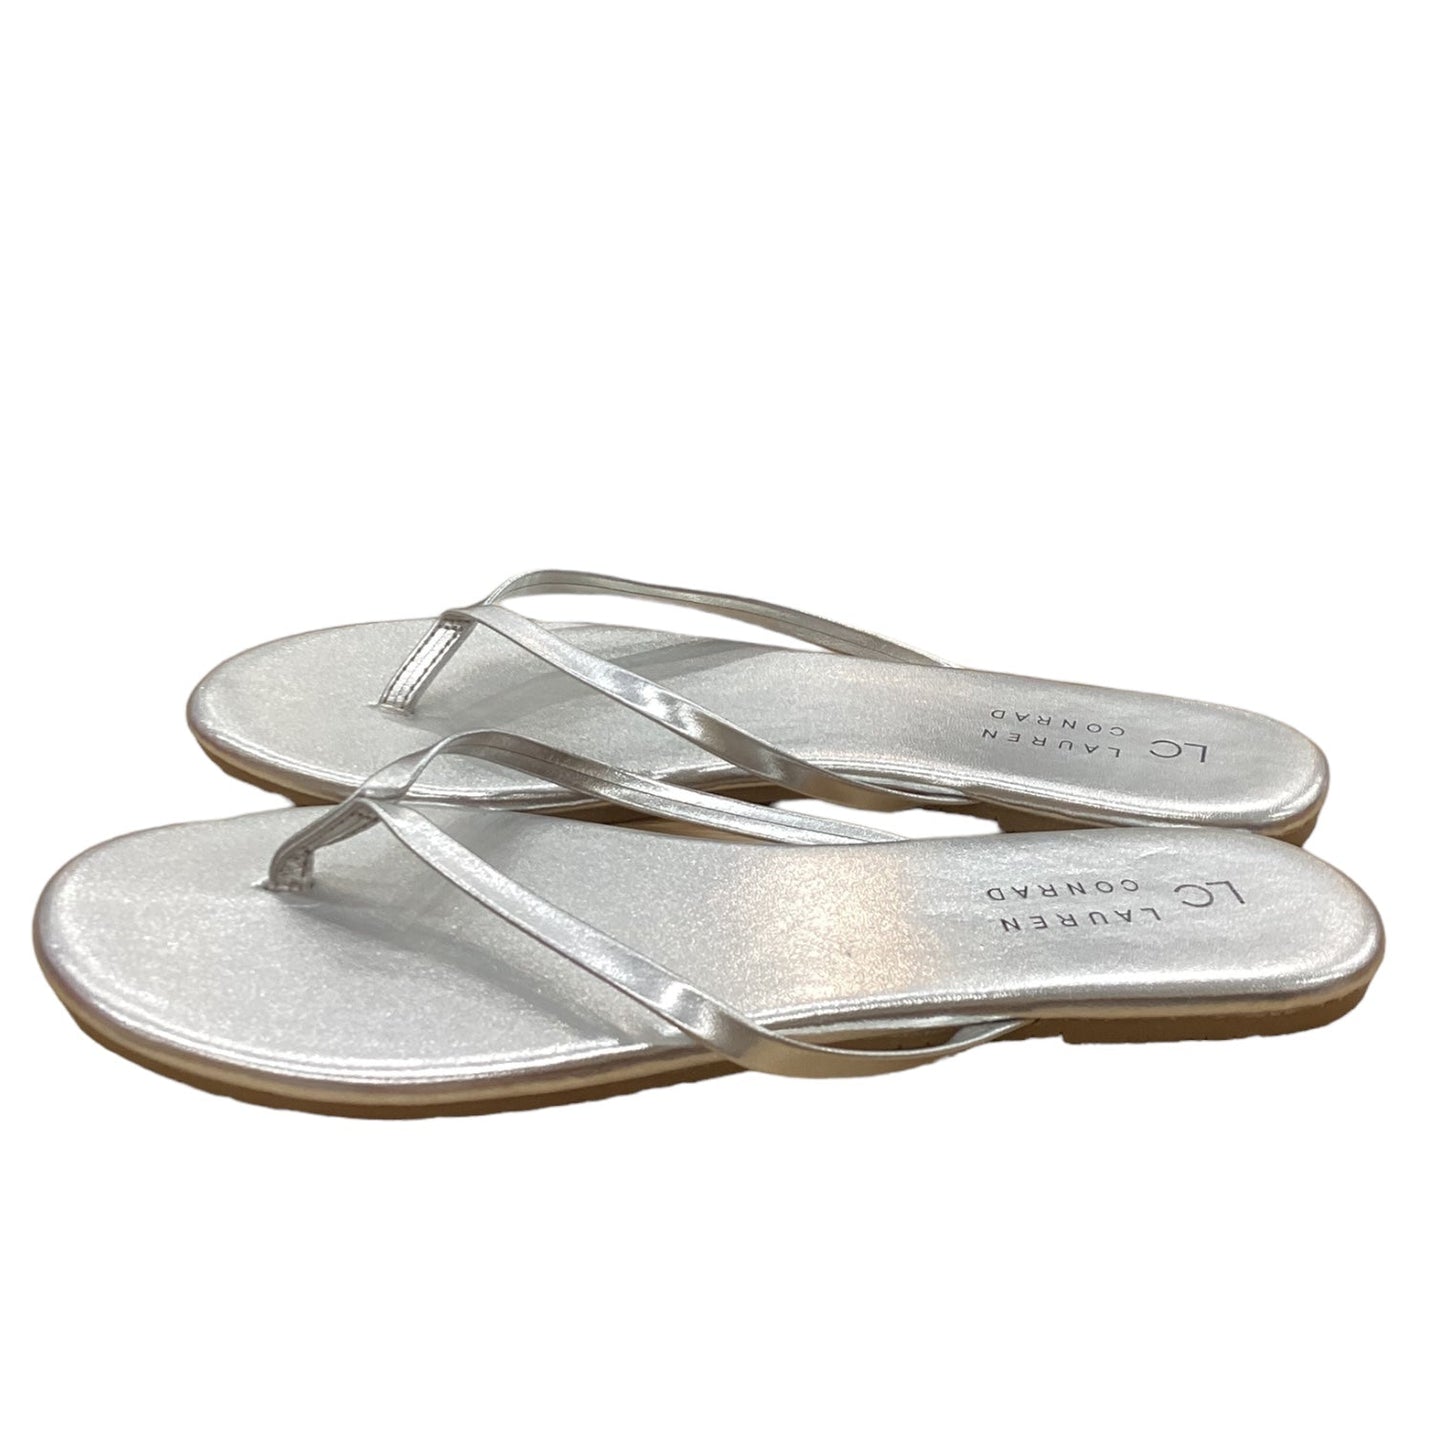 Silver Sandals Flip Flops Cmc, Size 8